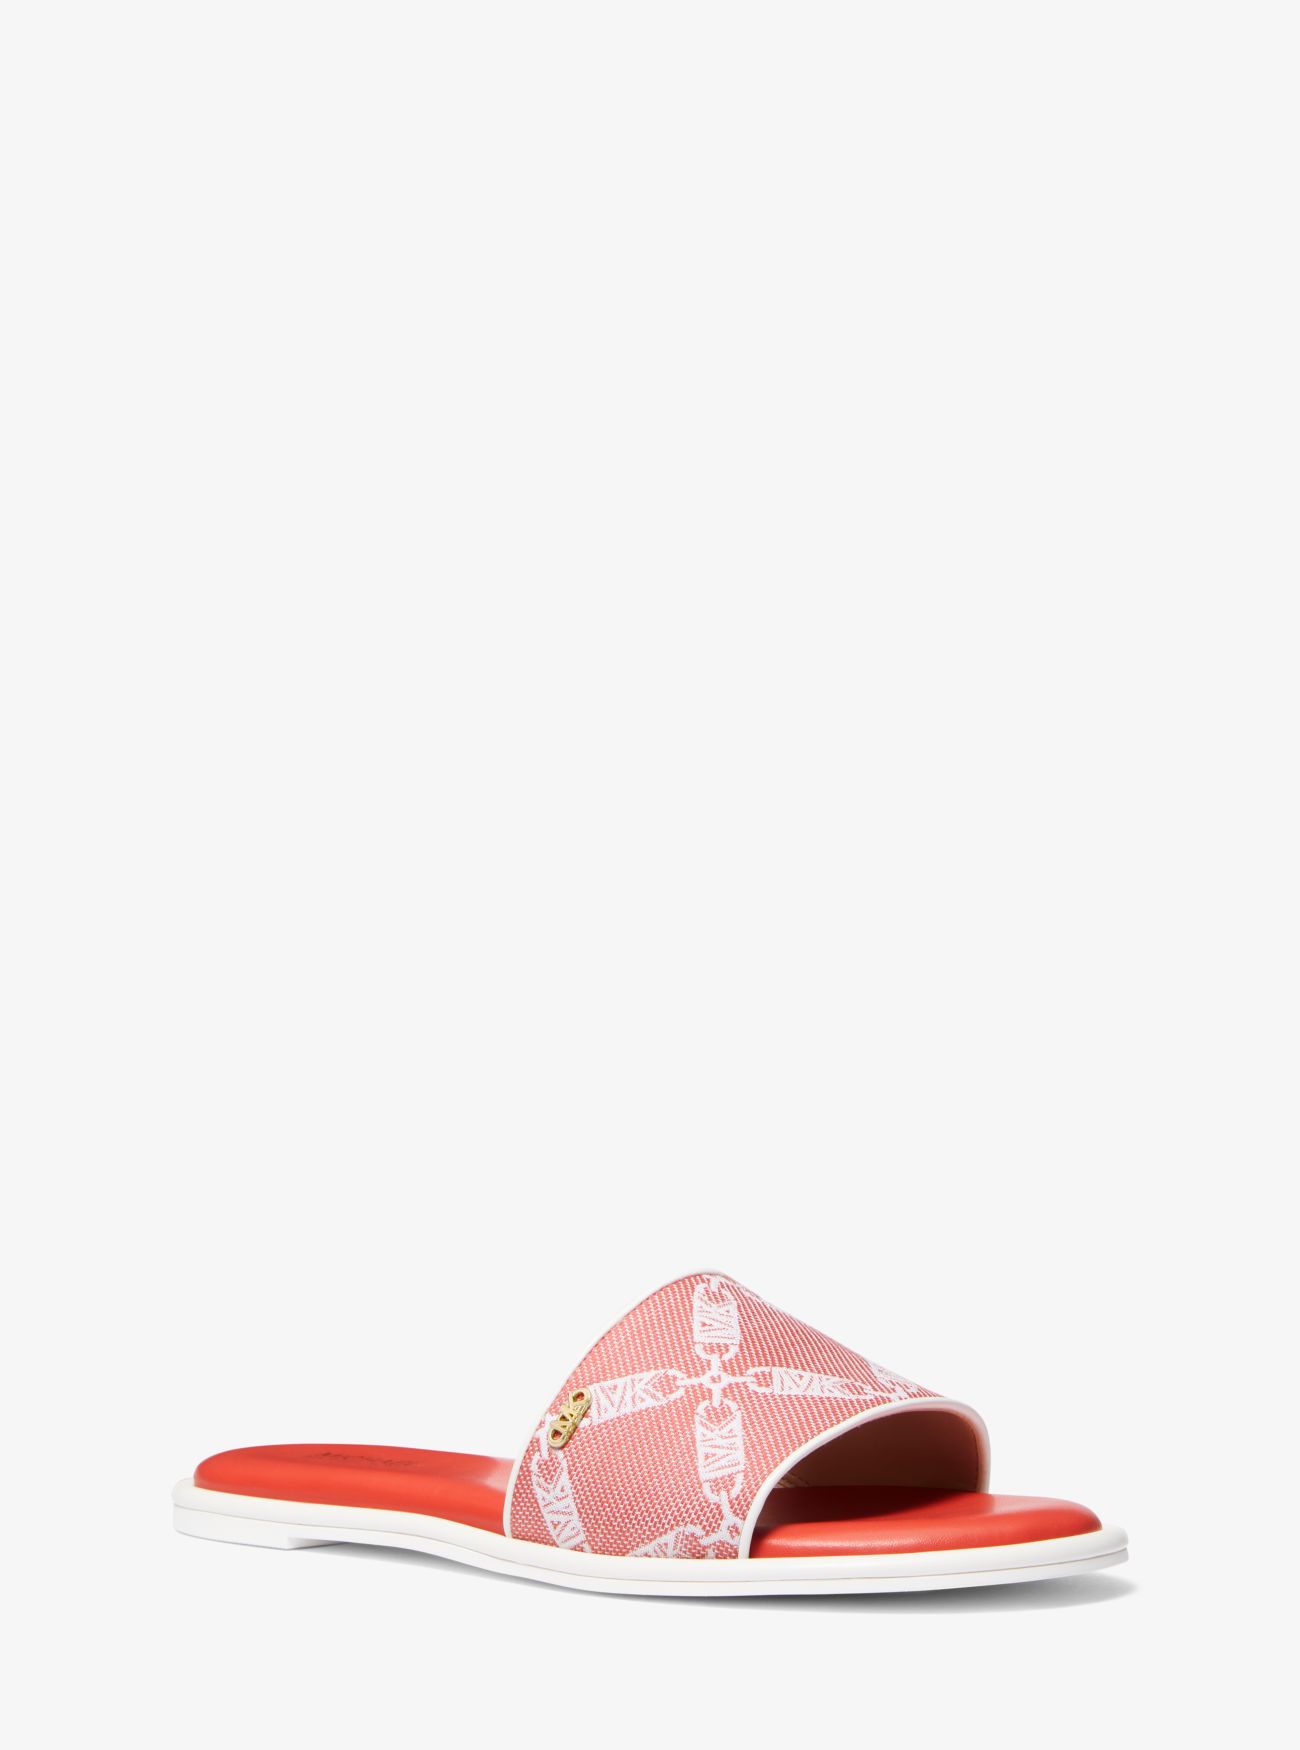 MK Saylor Empire Logo Jacquard Slide Sandal - Pink - Michael Kors